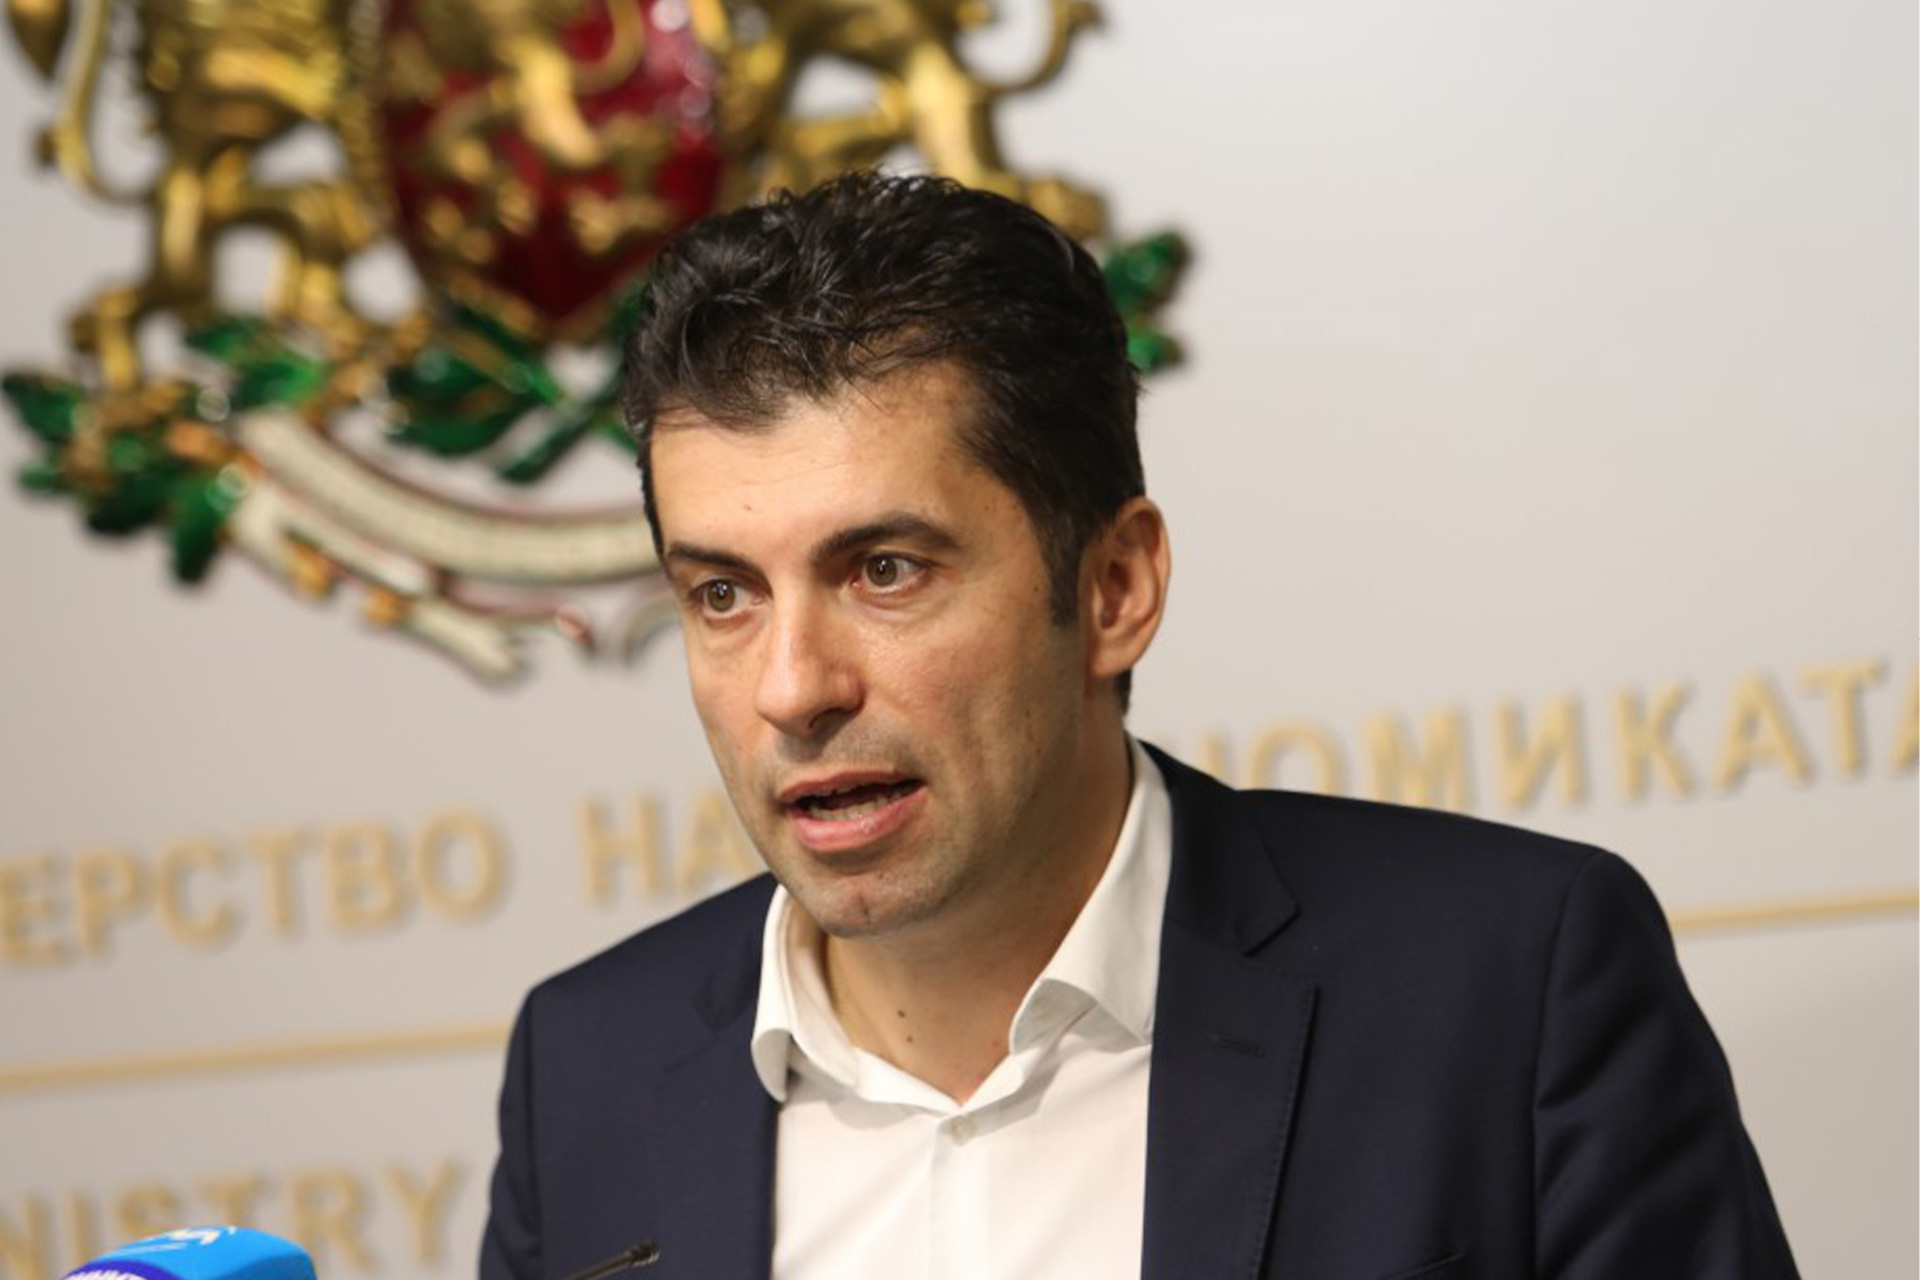 премьер министр болгарии